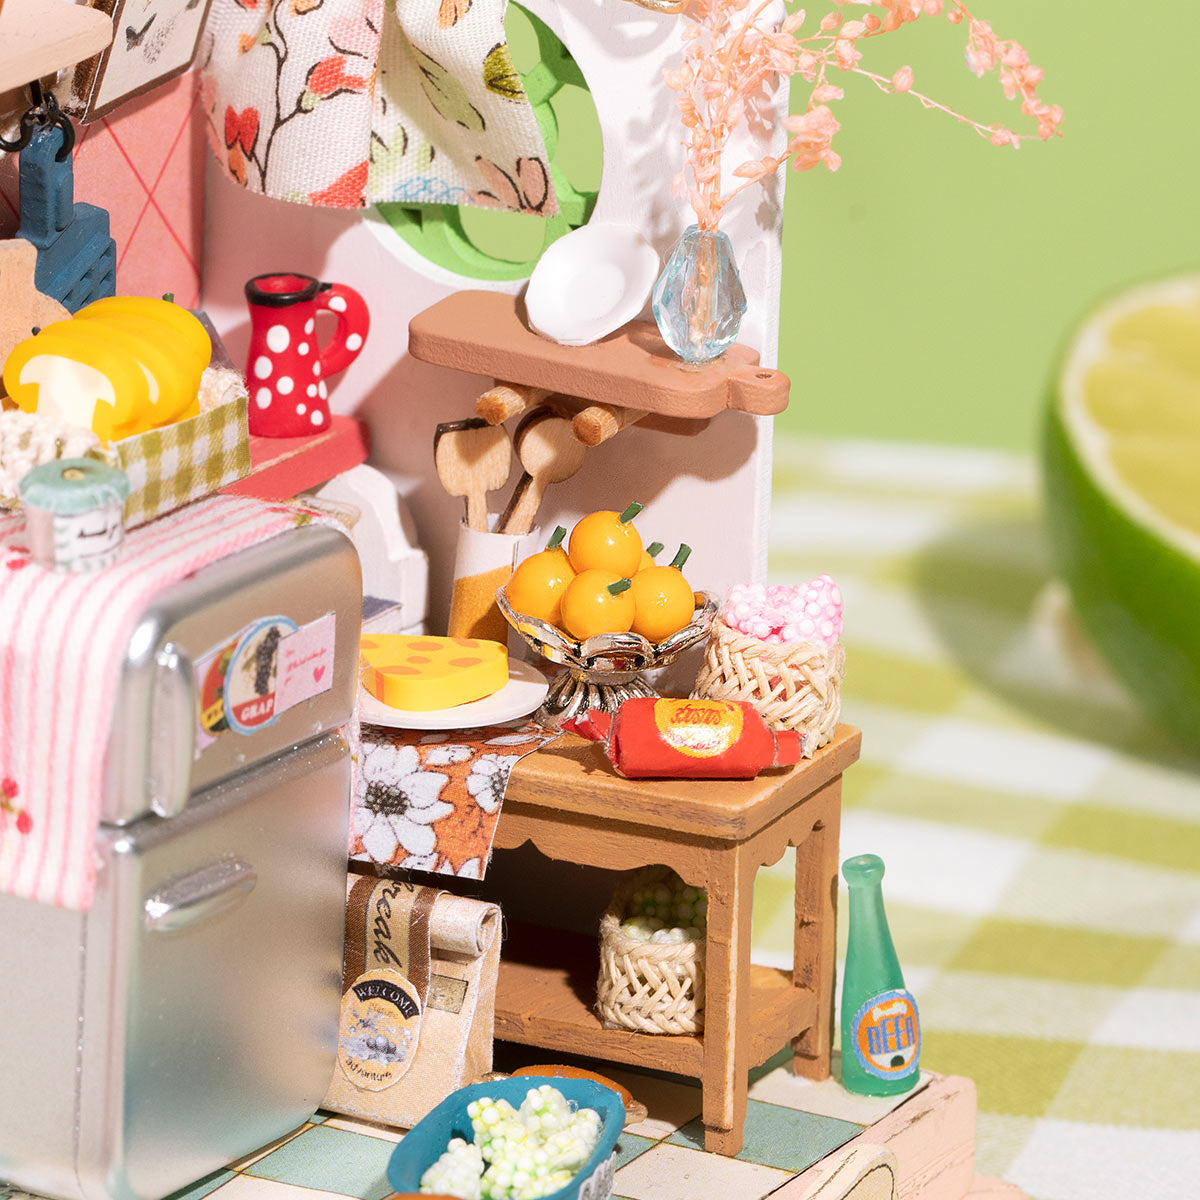 Miniature House Kit - Taste Life Kitchen